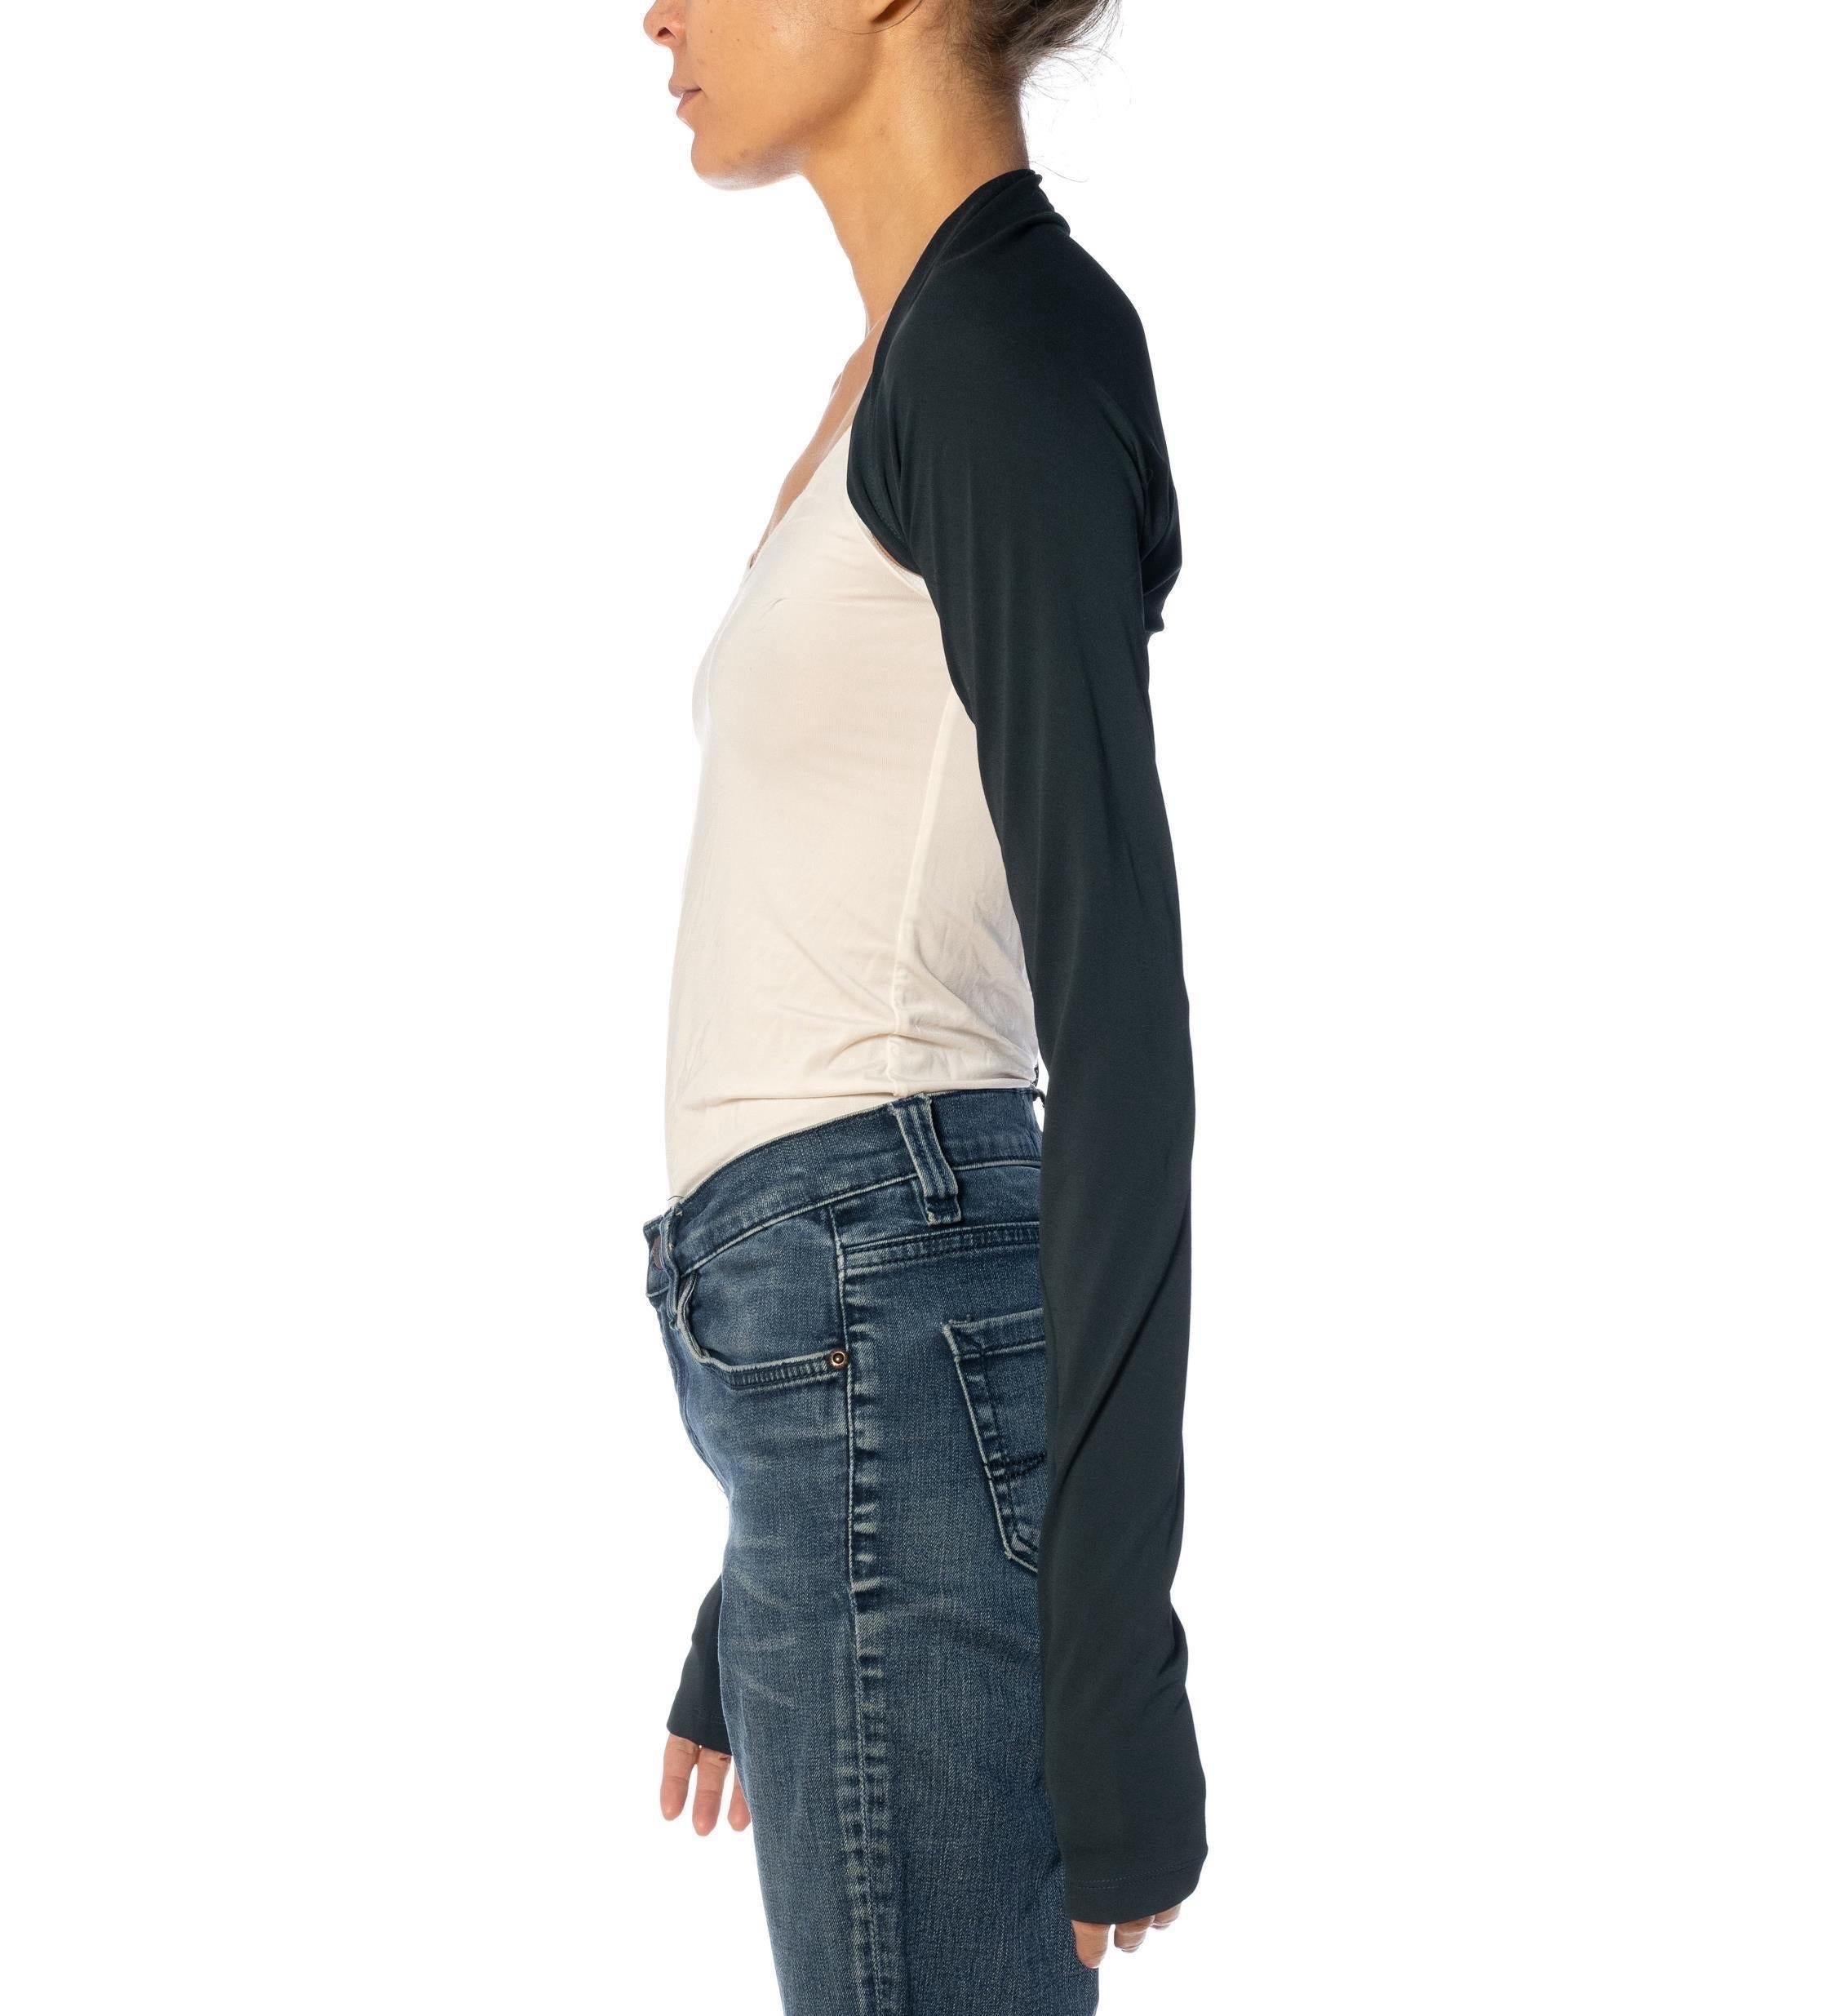 Women's 2000S DONNA KARAN Dark Teal Rayon Long Sleeve Shrug For Sale